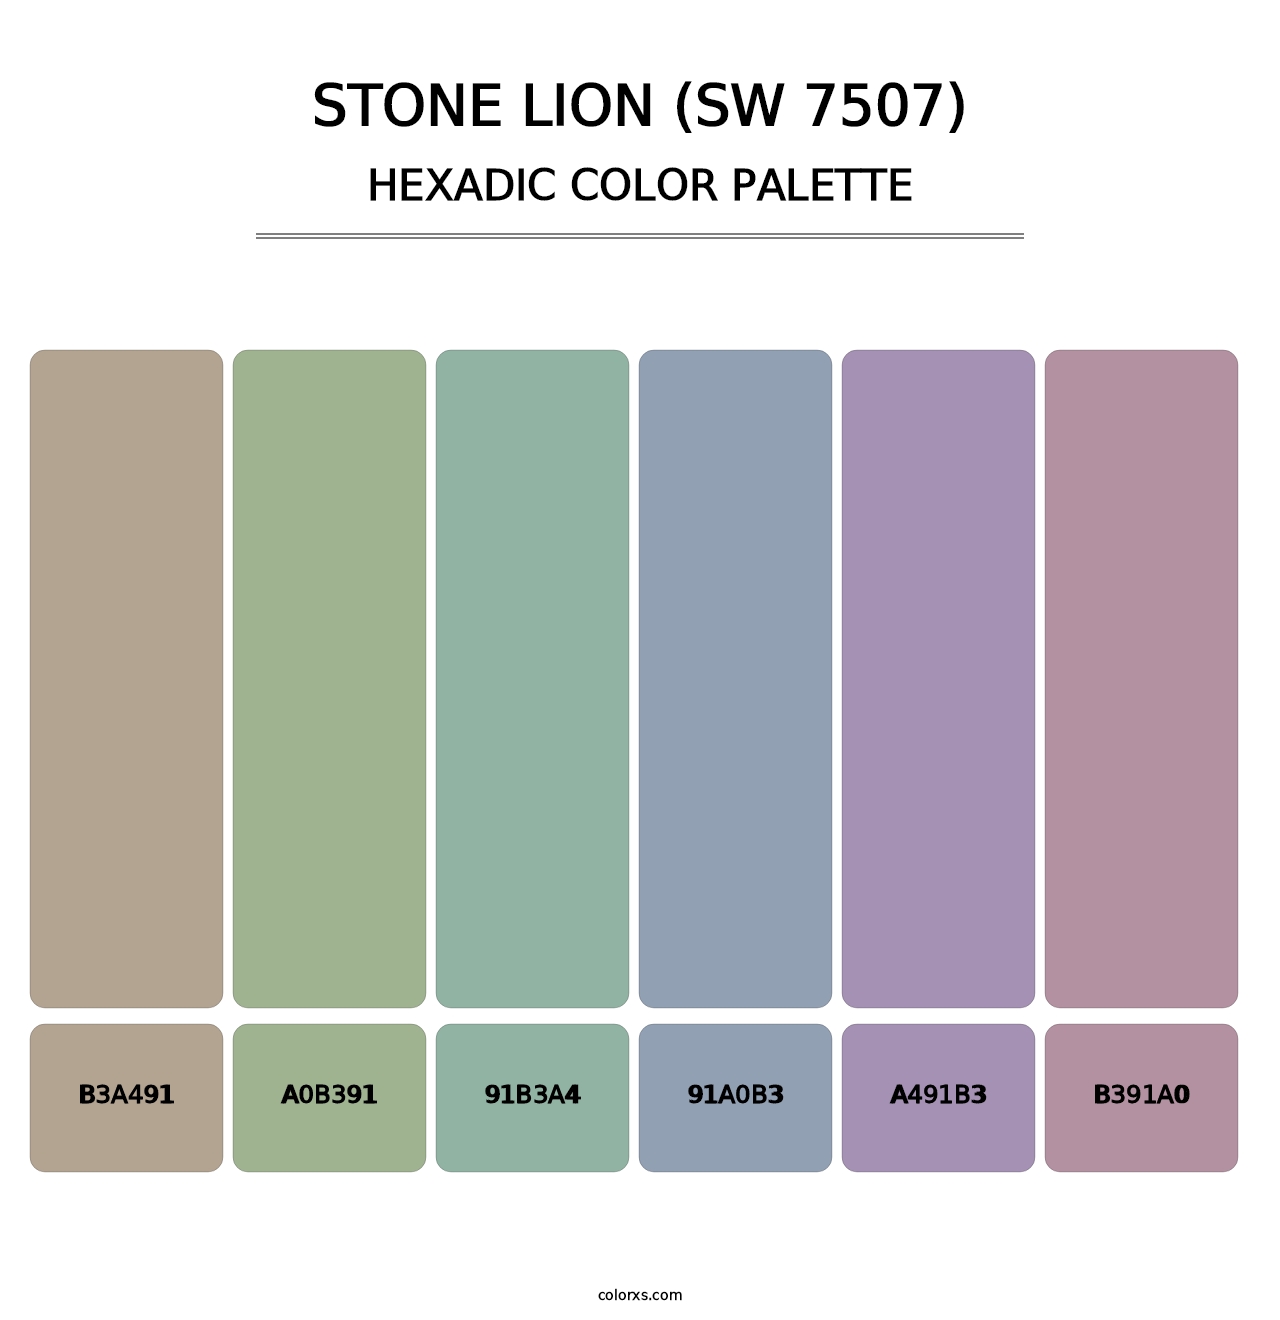 Stone Lion (SW 7507) - Hexadic Color Palette